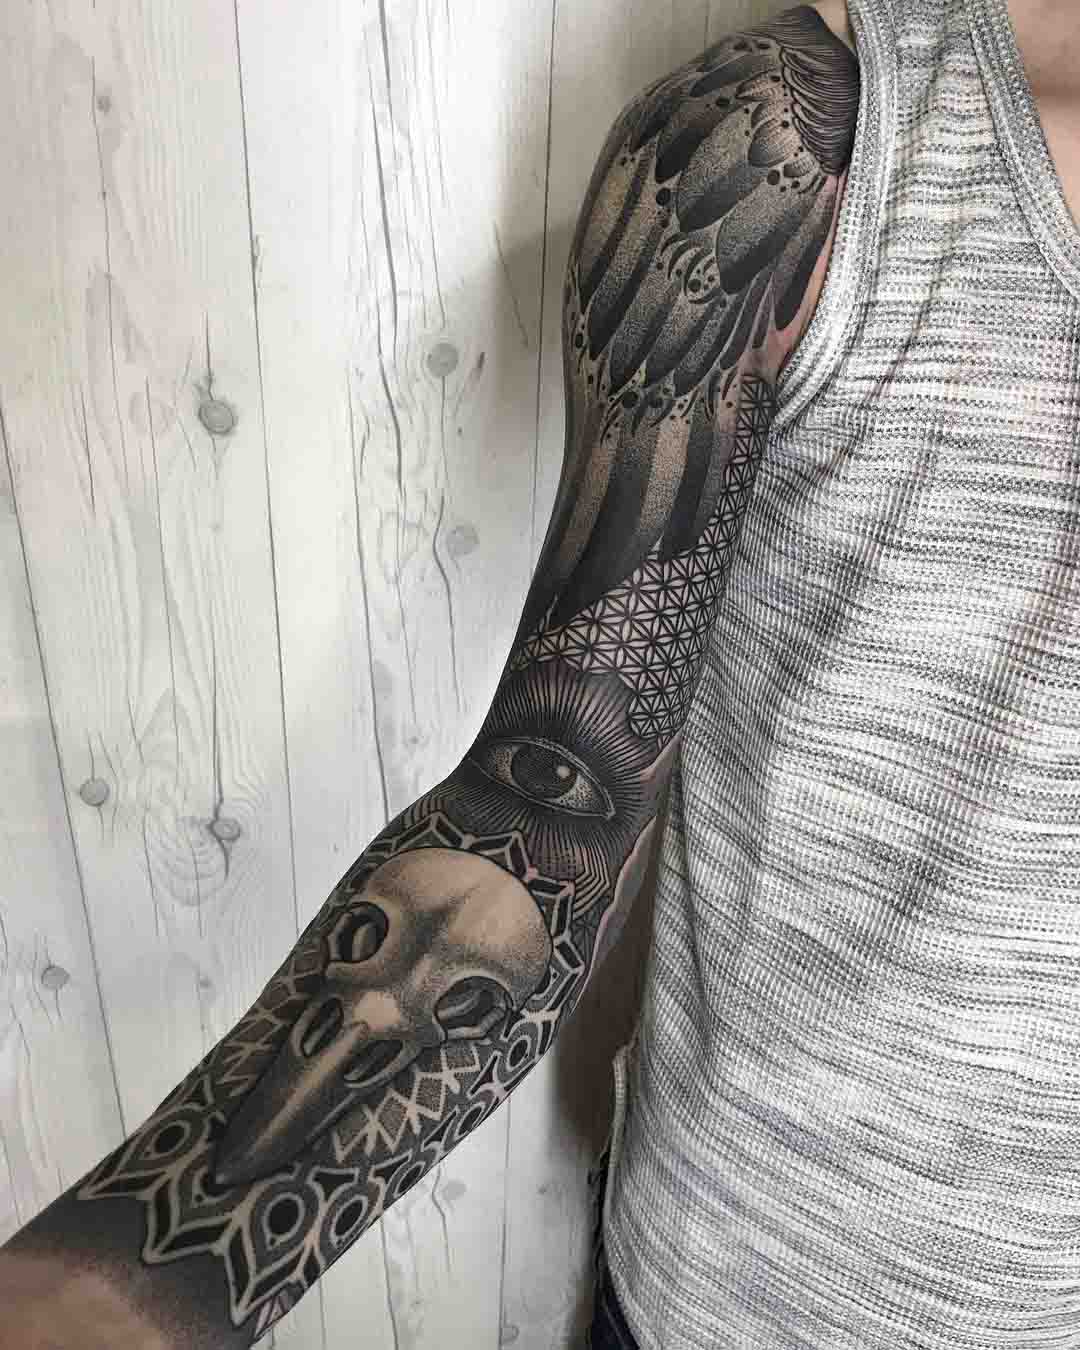 tattoo sleeve dotwork style